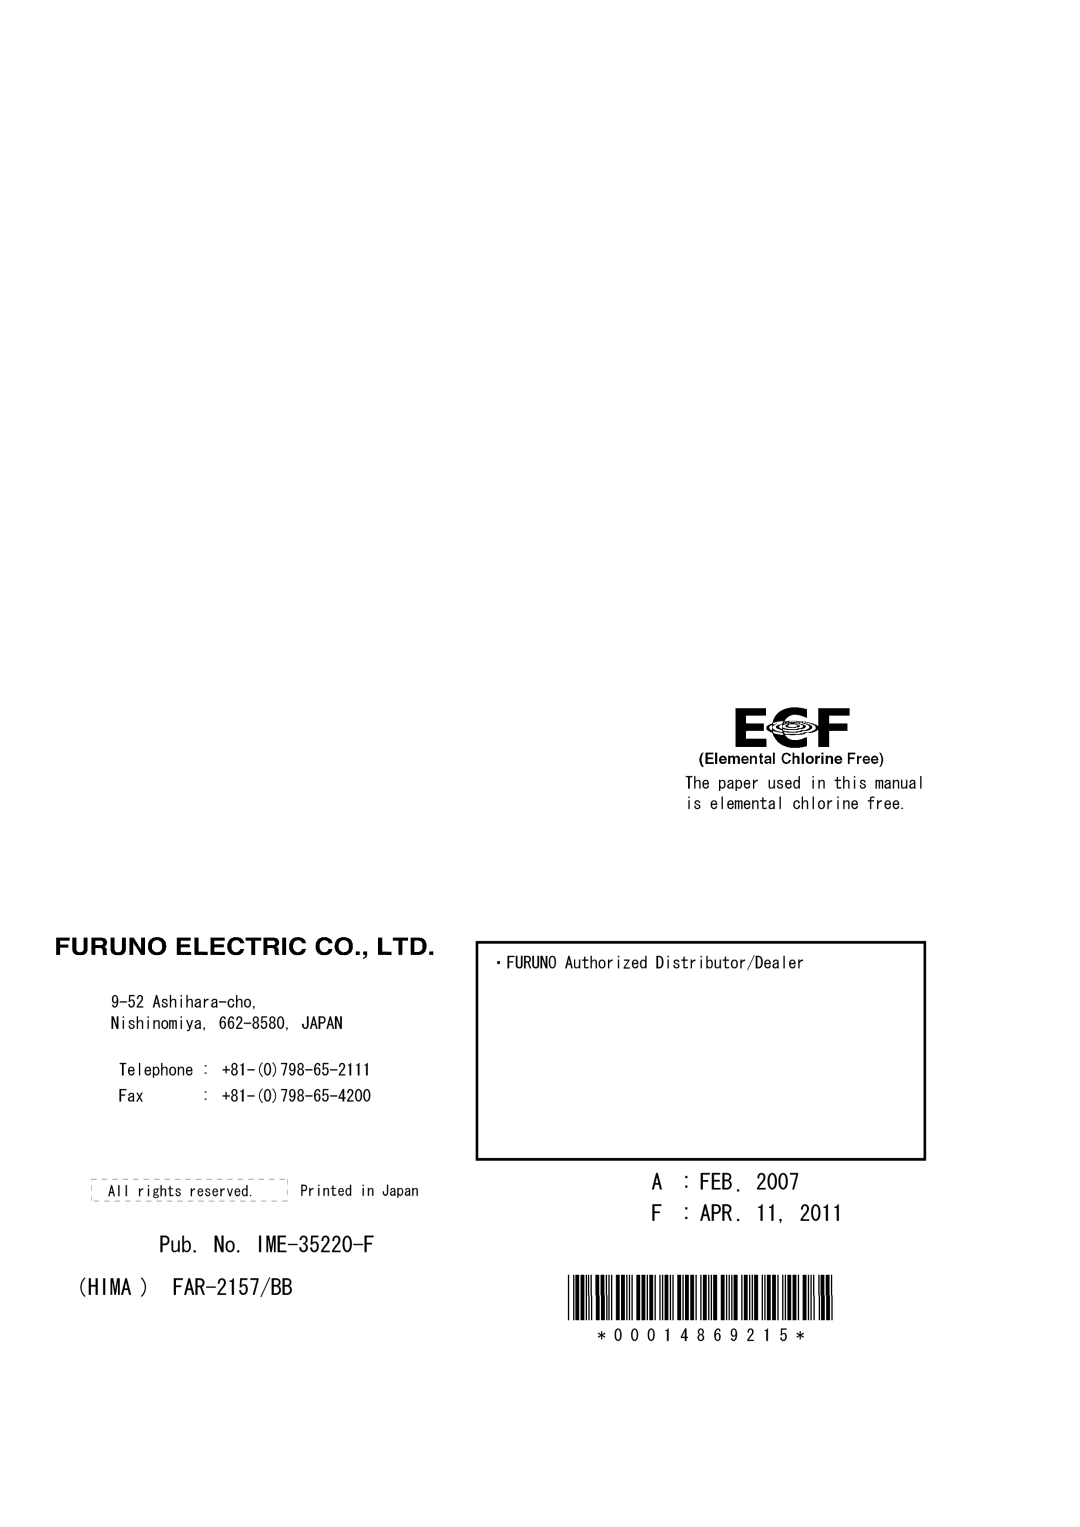 Furuno FAR-2157 installation manual 00014869215 